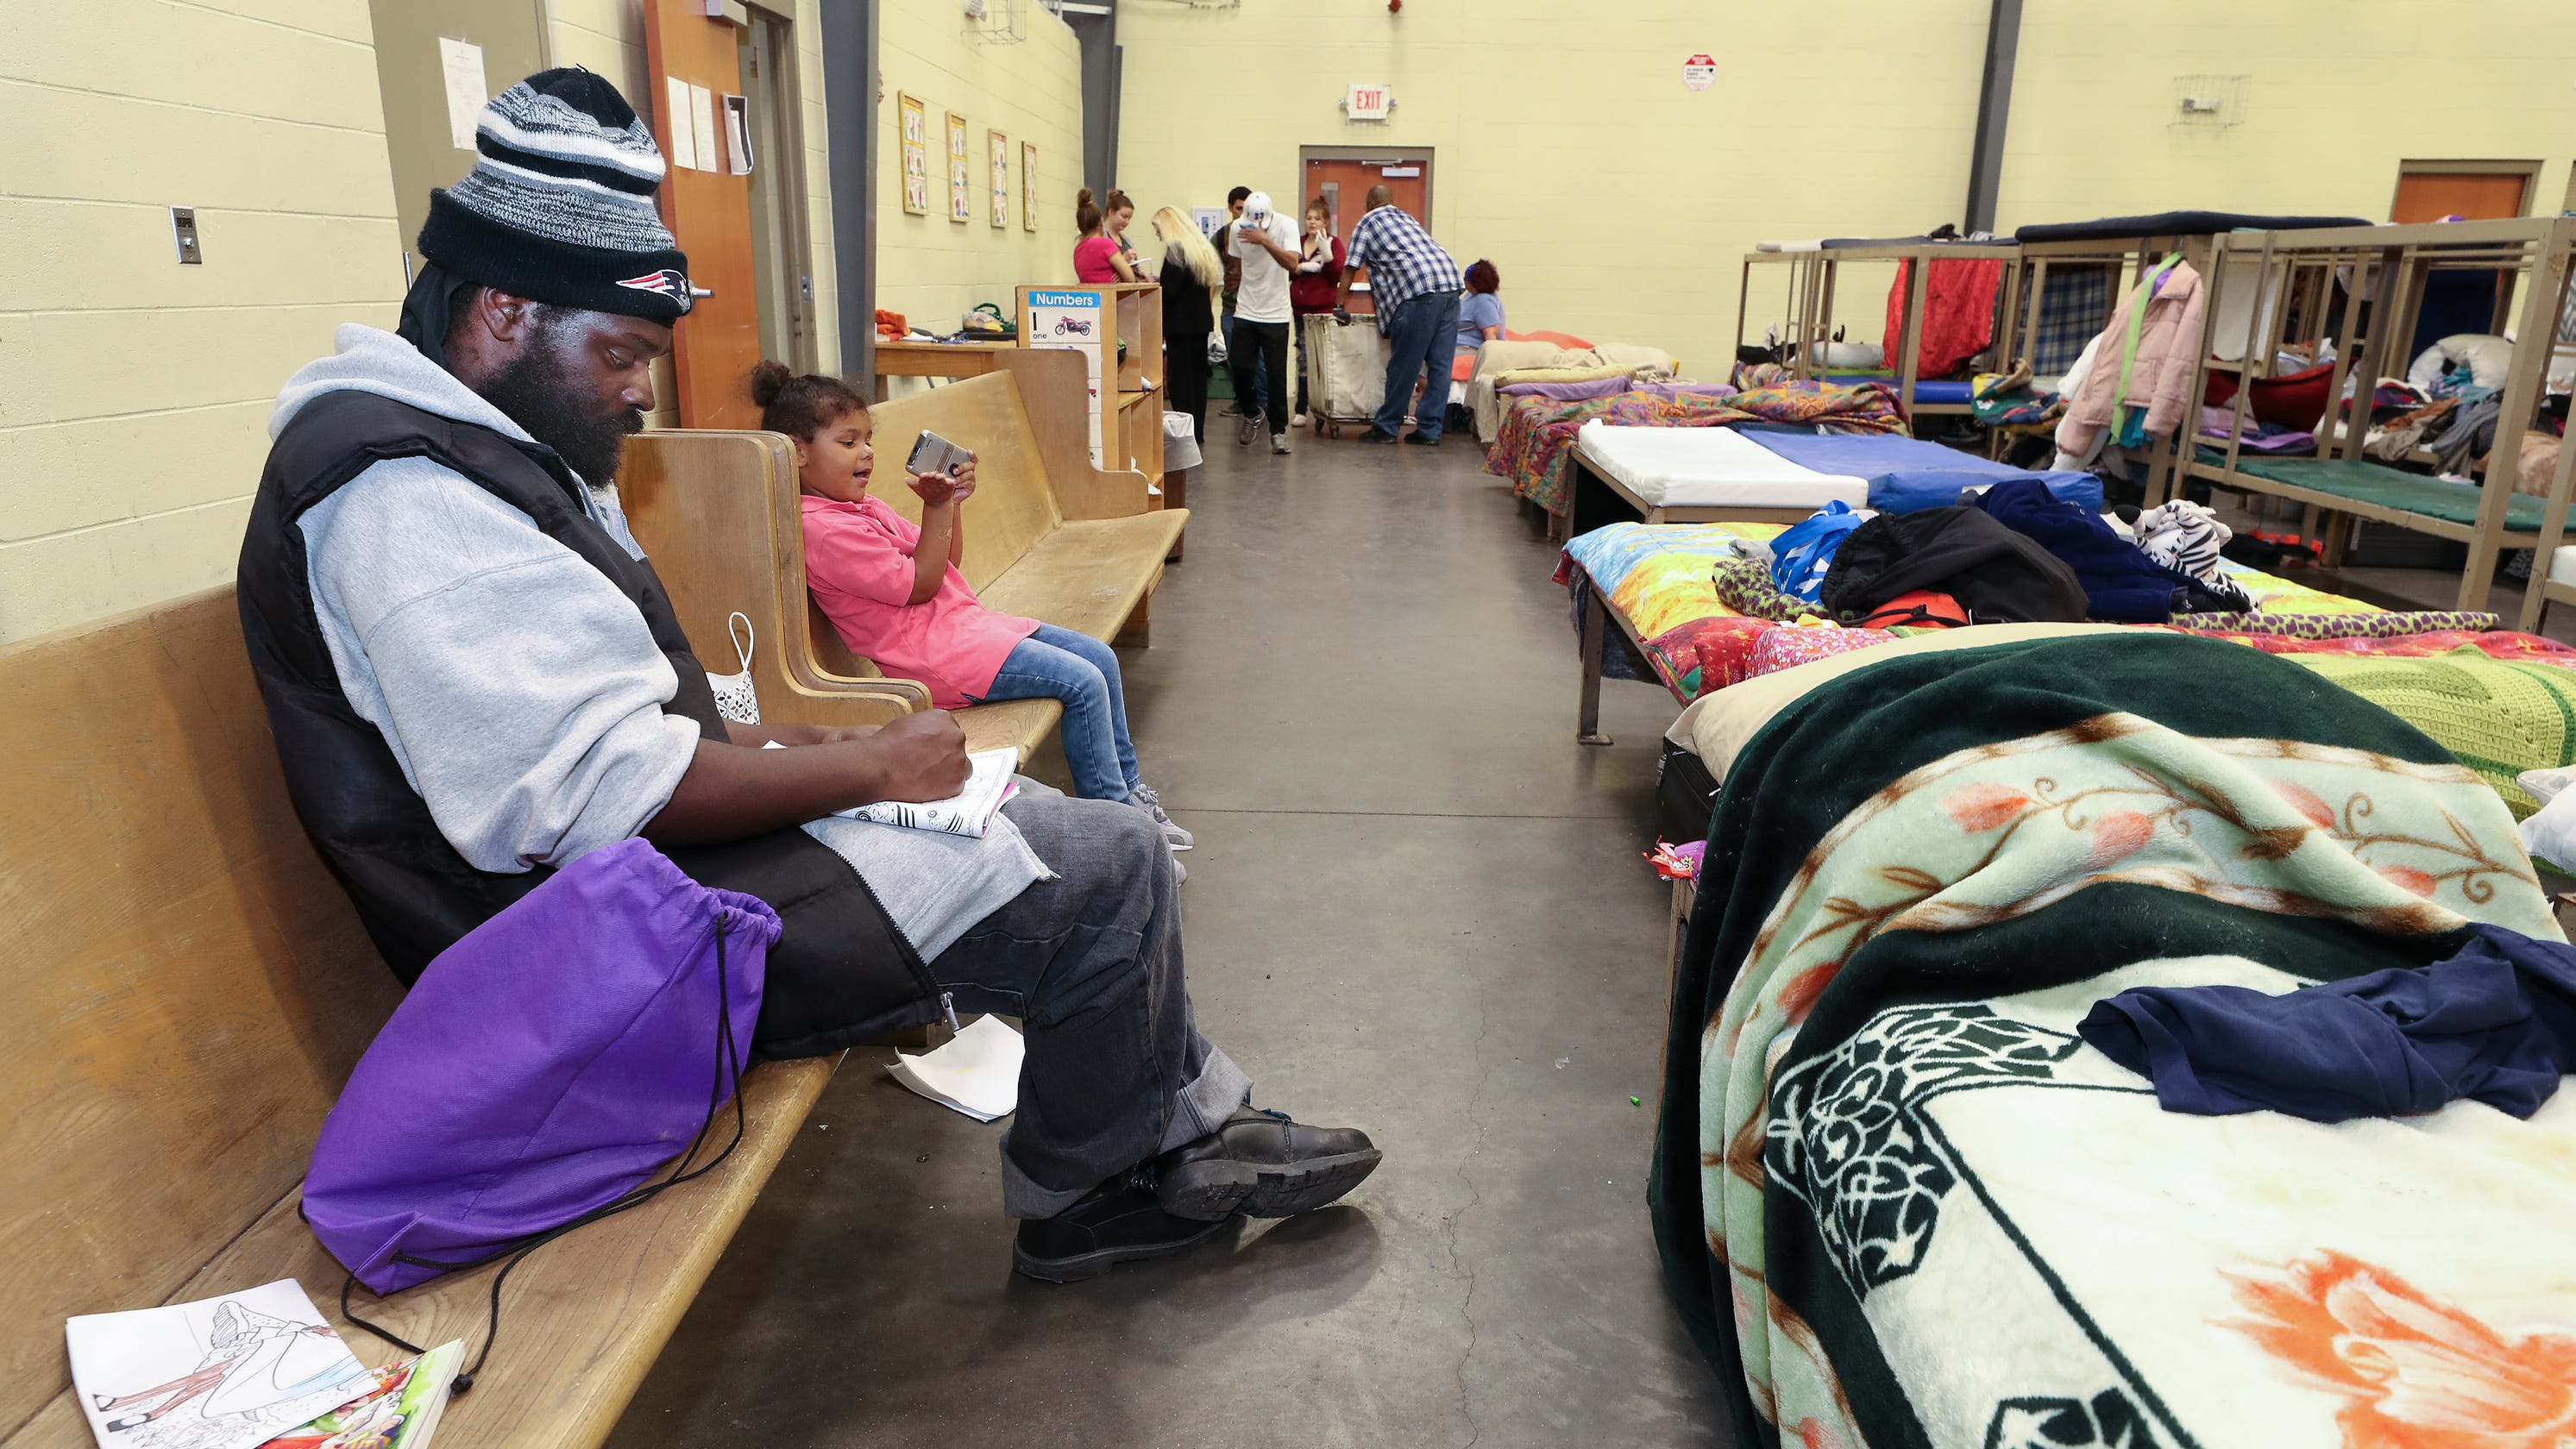 Louisville homeless: City wants 'multiple' low-barrier shelters